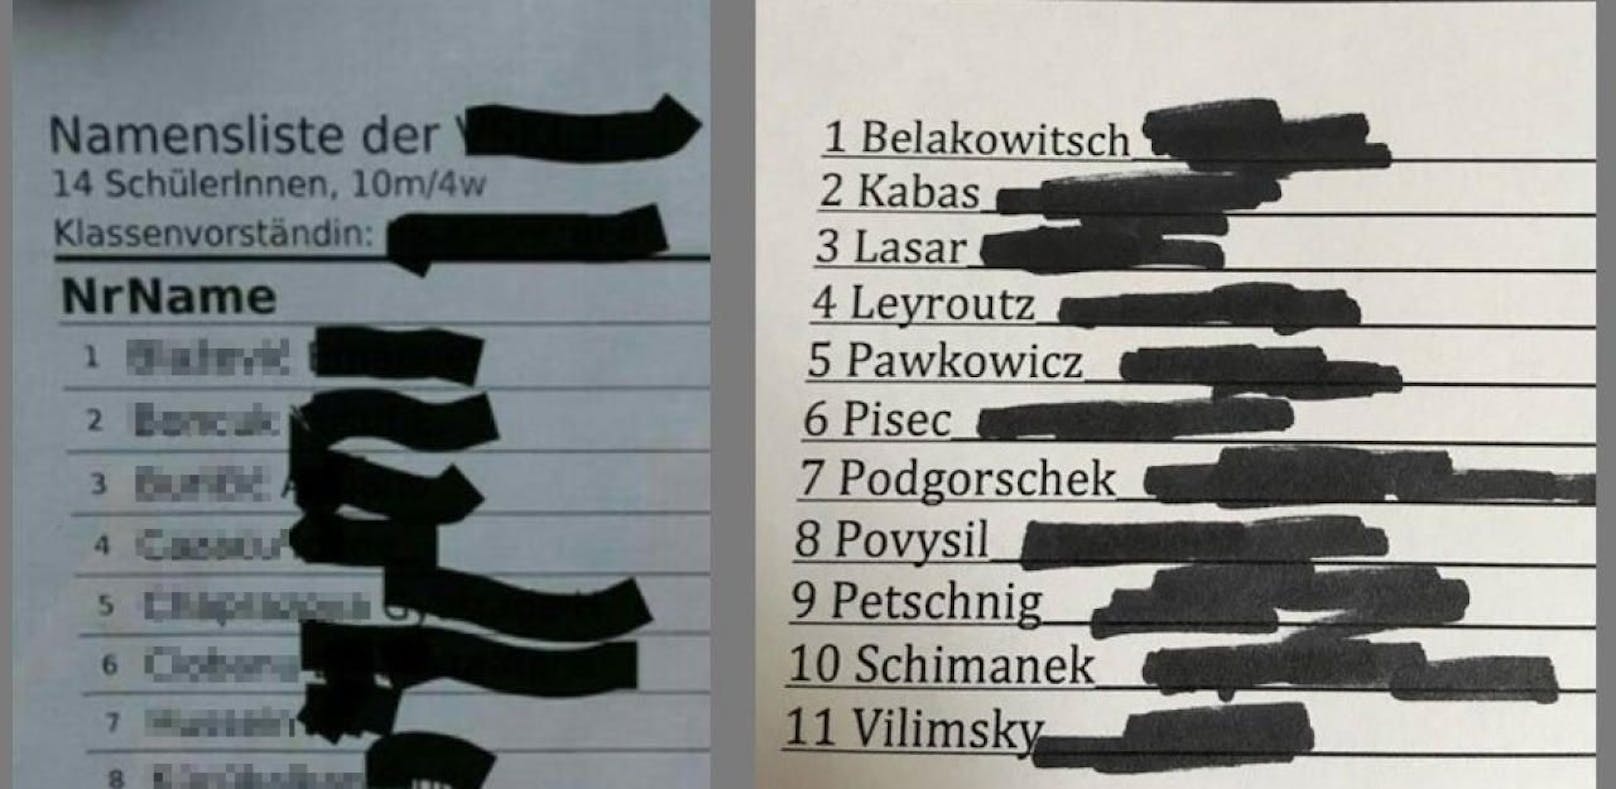 Nach Schüler-Bashing: So "fremd" sind FPÖ-Namen